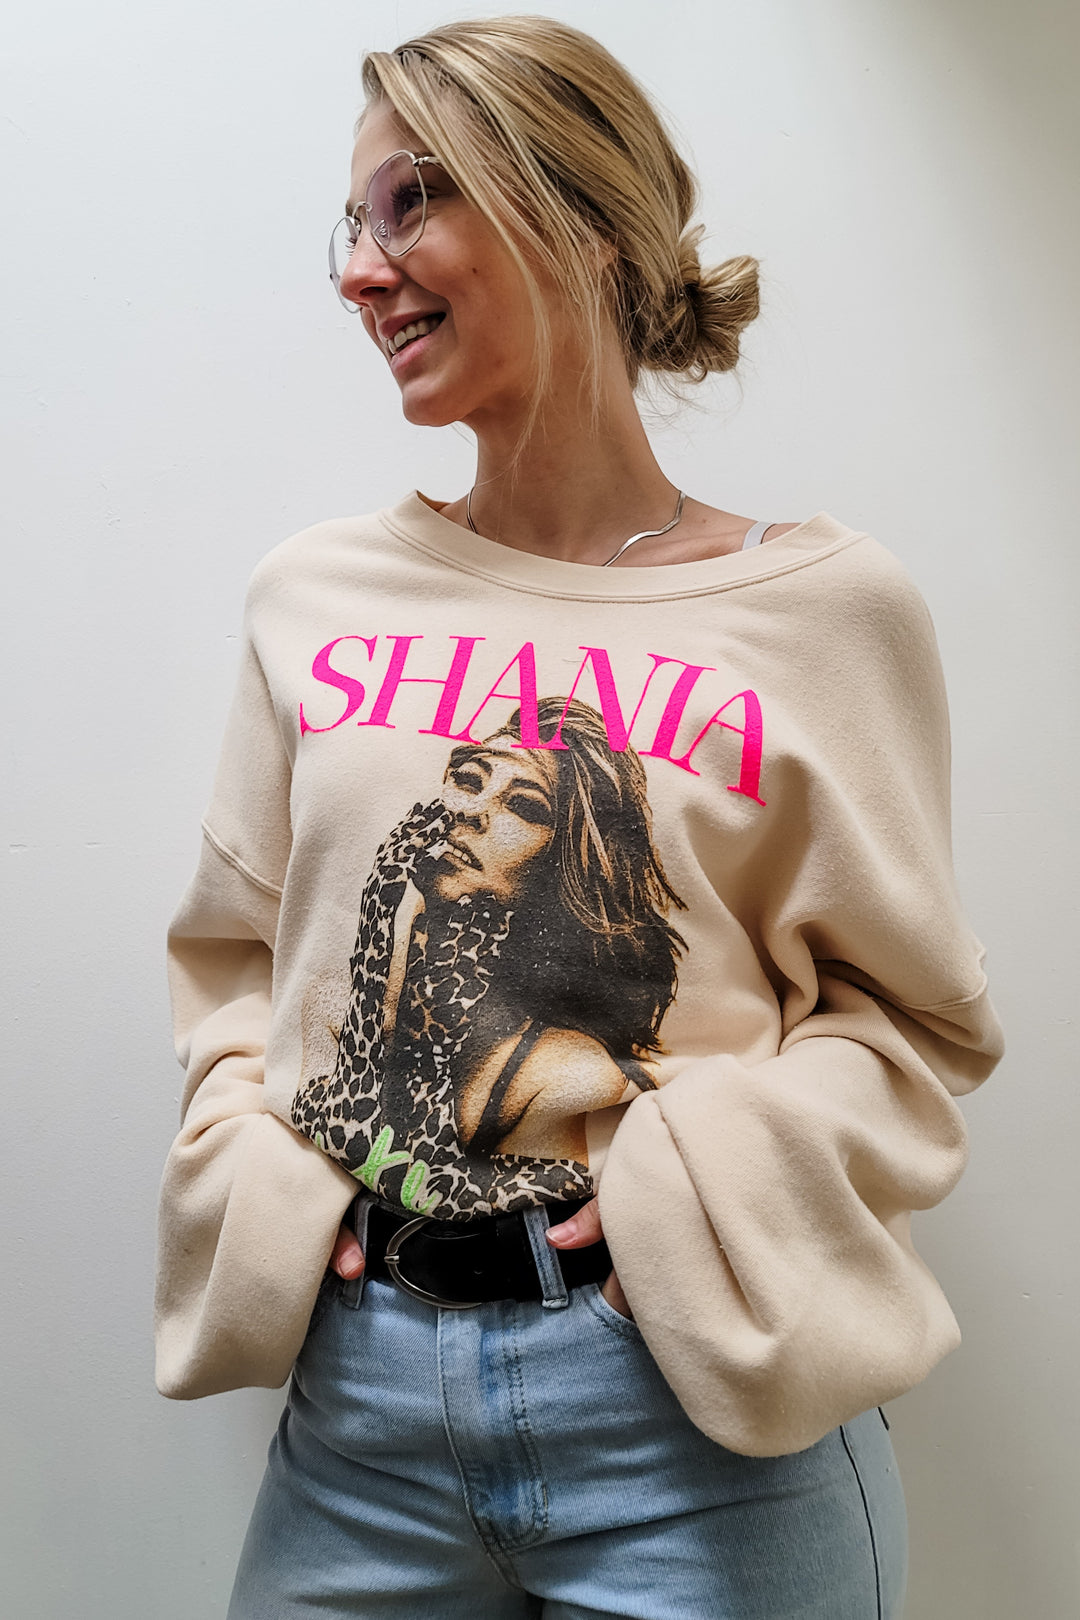 Day Dreamer Cream Shania Lets Go Girls Graphic Sweatshirt